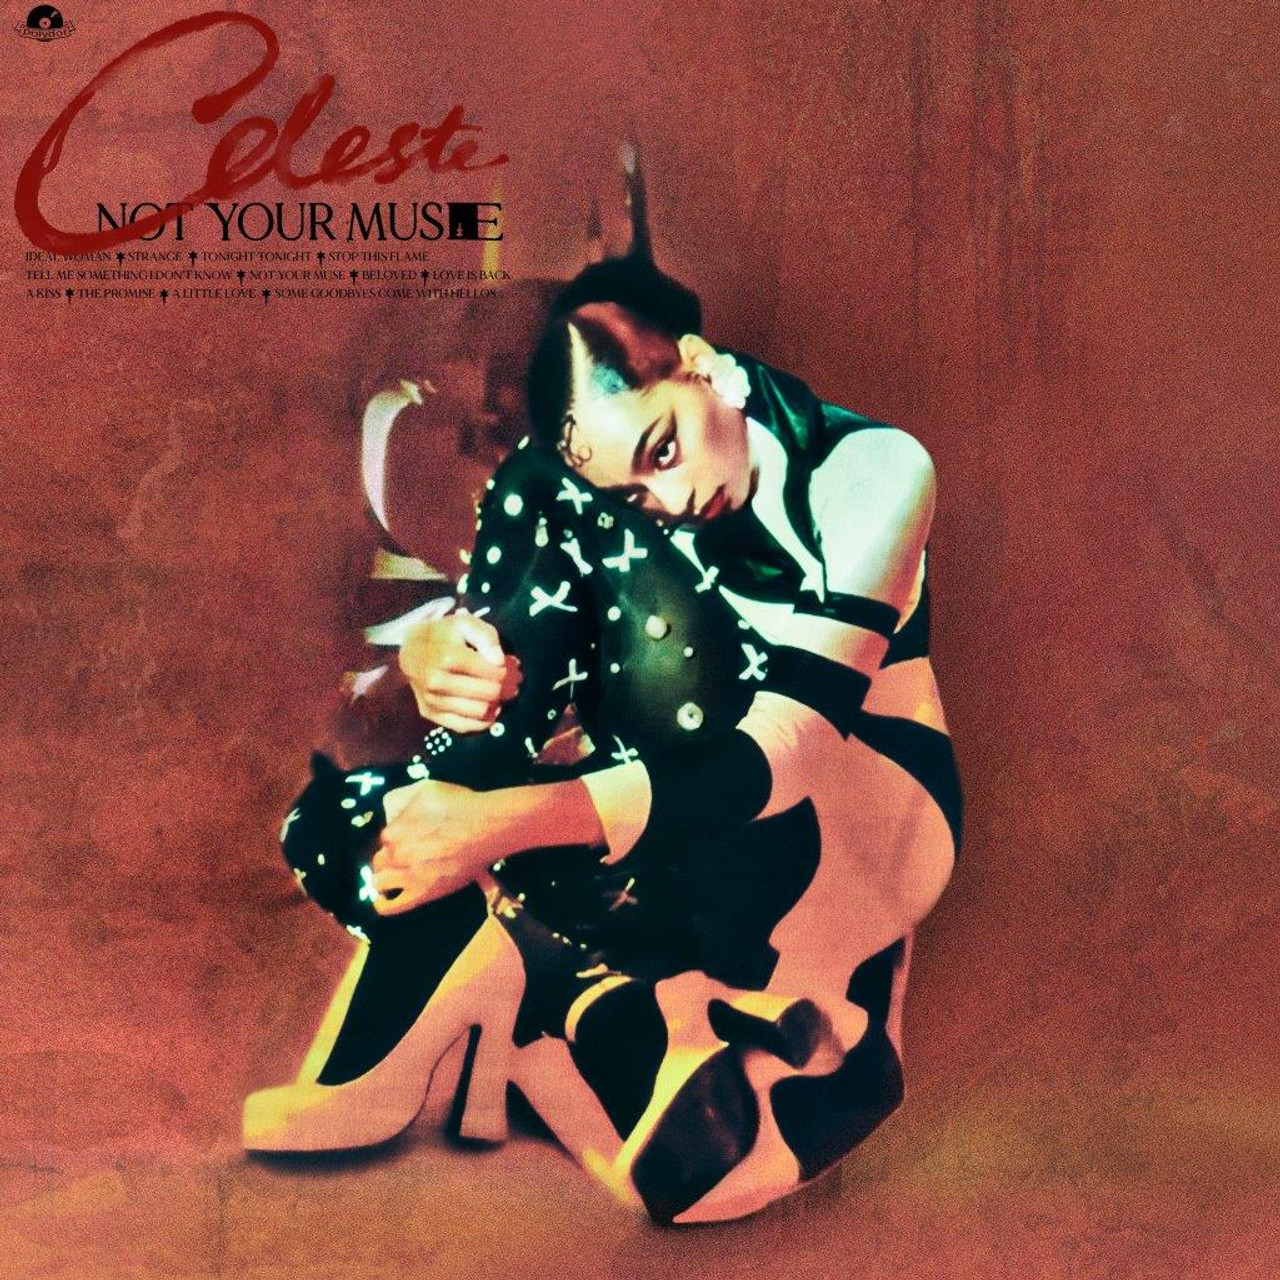 Celeste - Not Your Muse, album cover